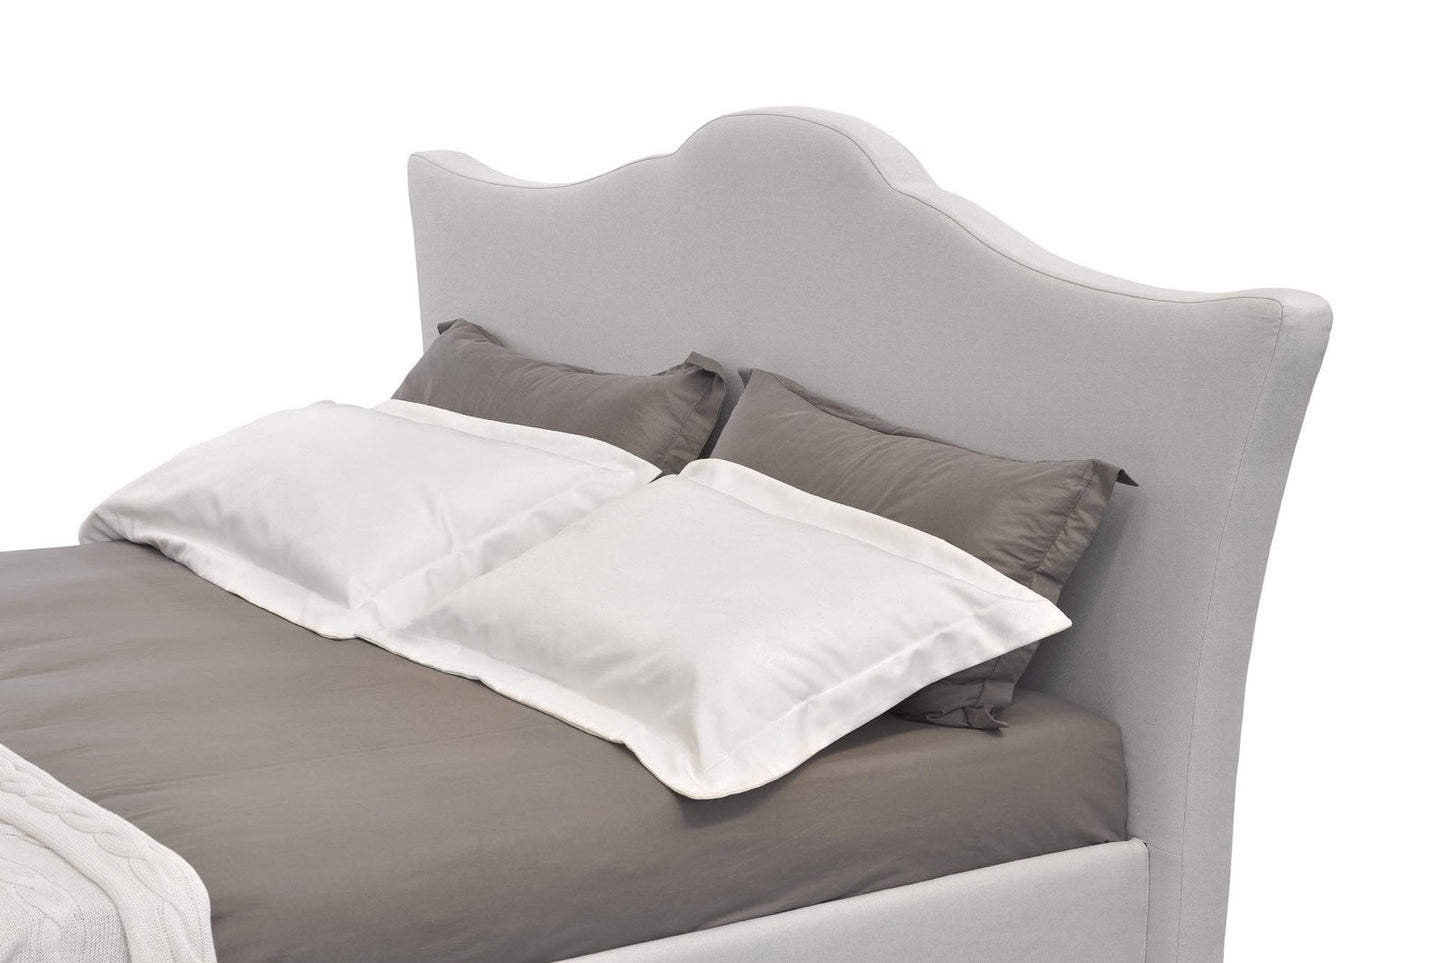 Novaluna - Cleo Platform Bed - Made in Italy - Eurohaus Modern Furniture LLC